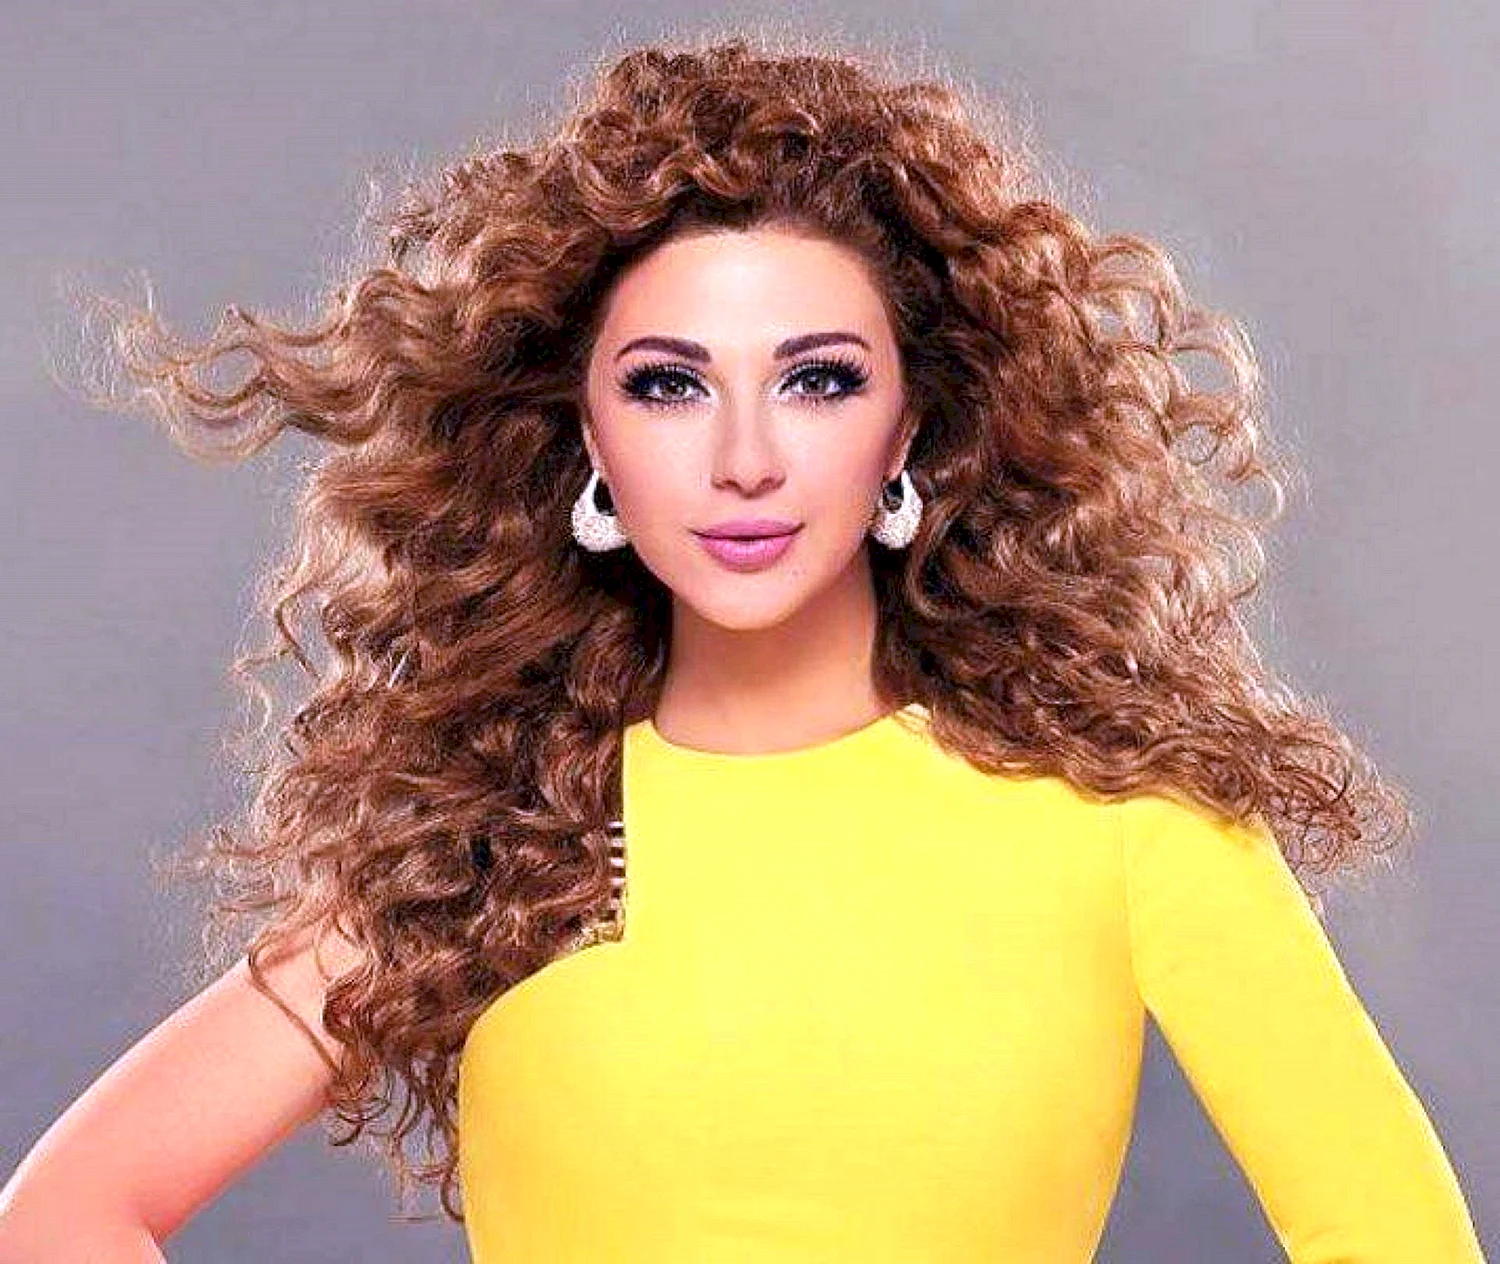 Айви ливан певица голая